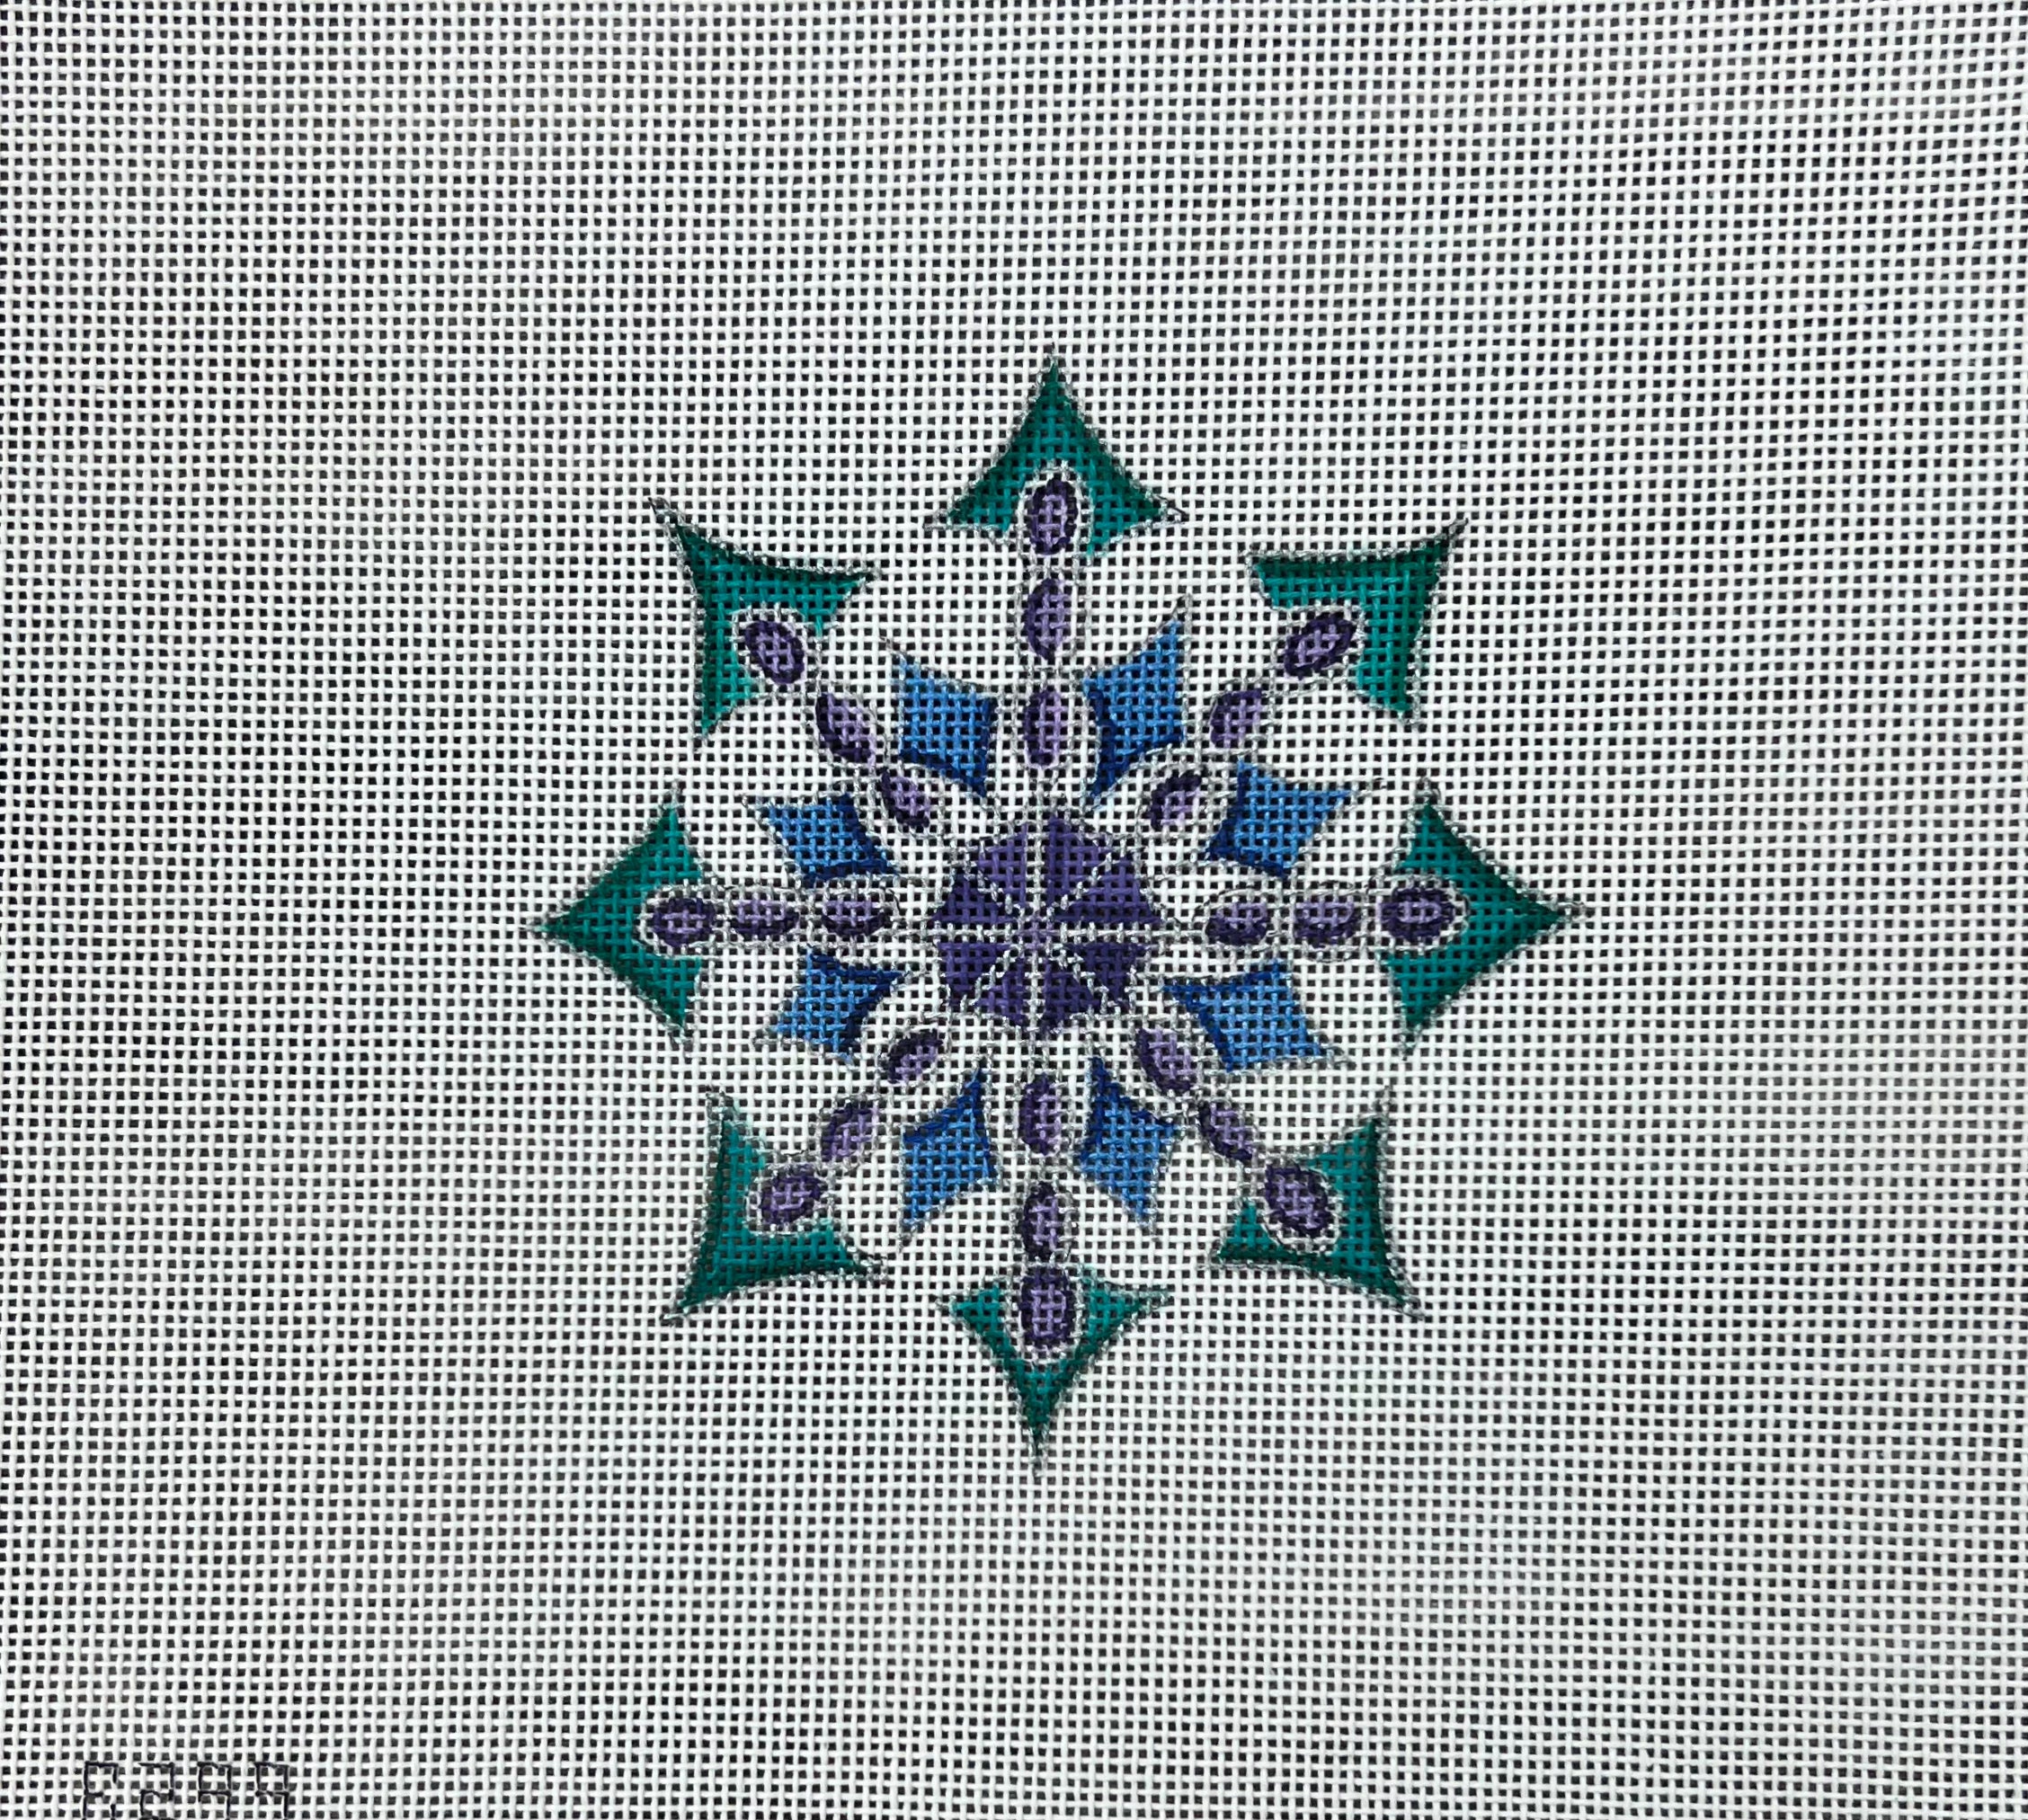 Mosaic Star Tile R299